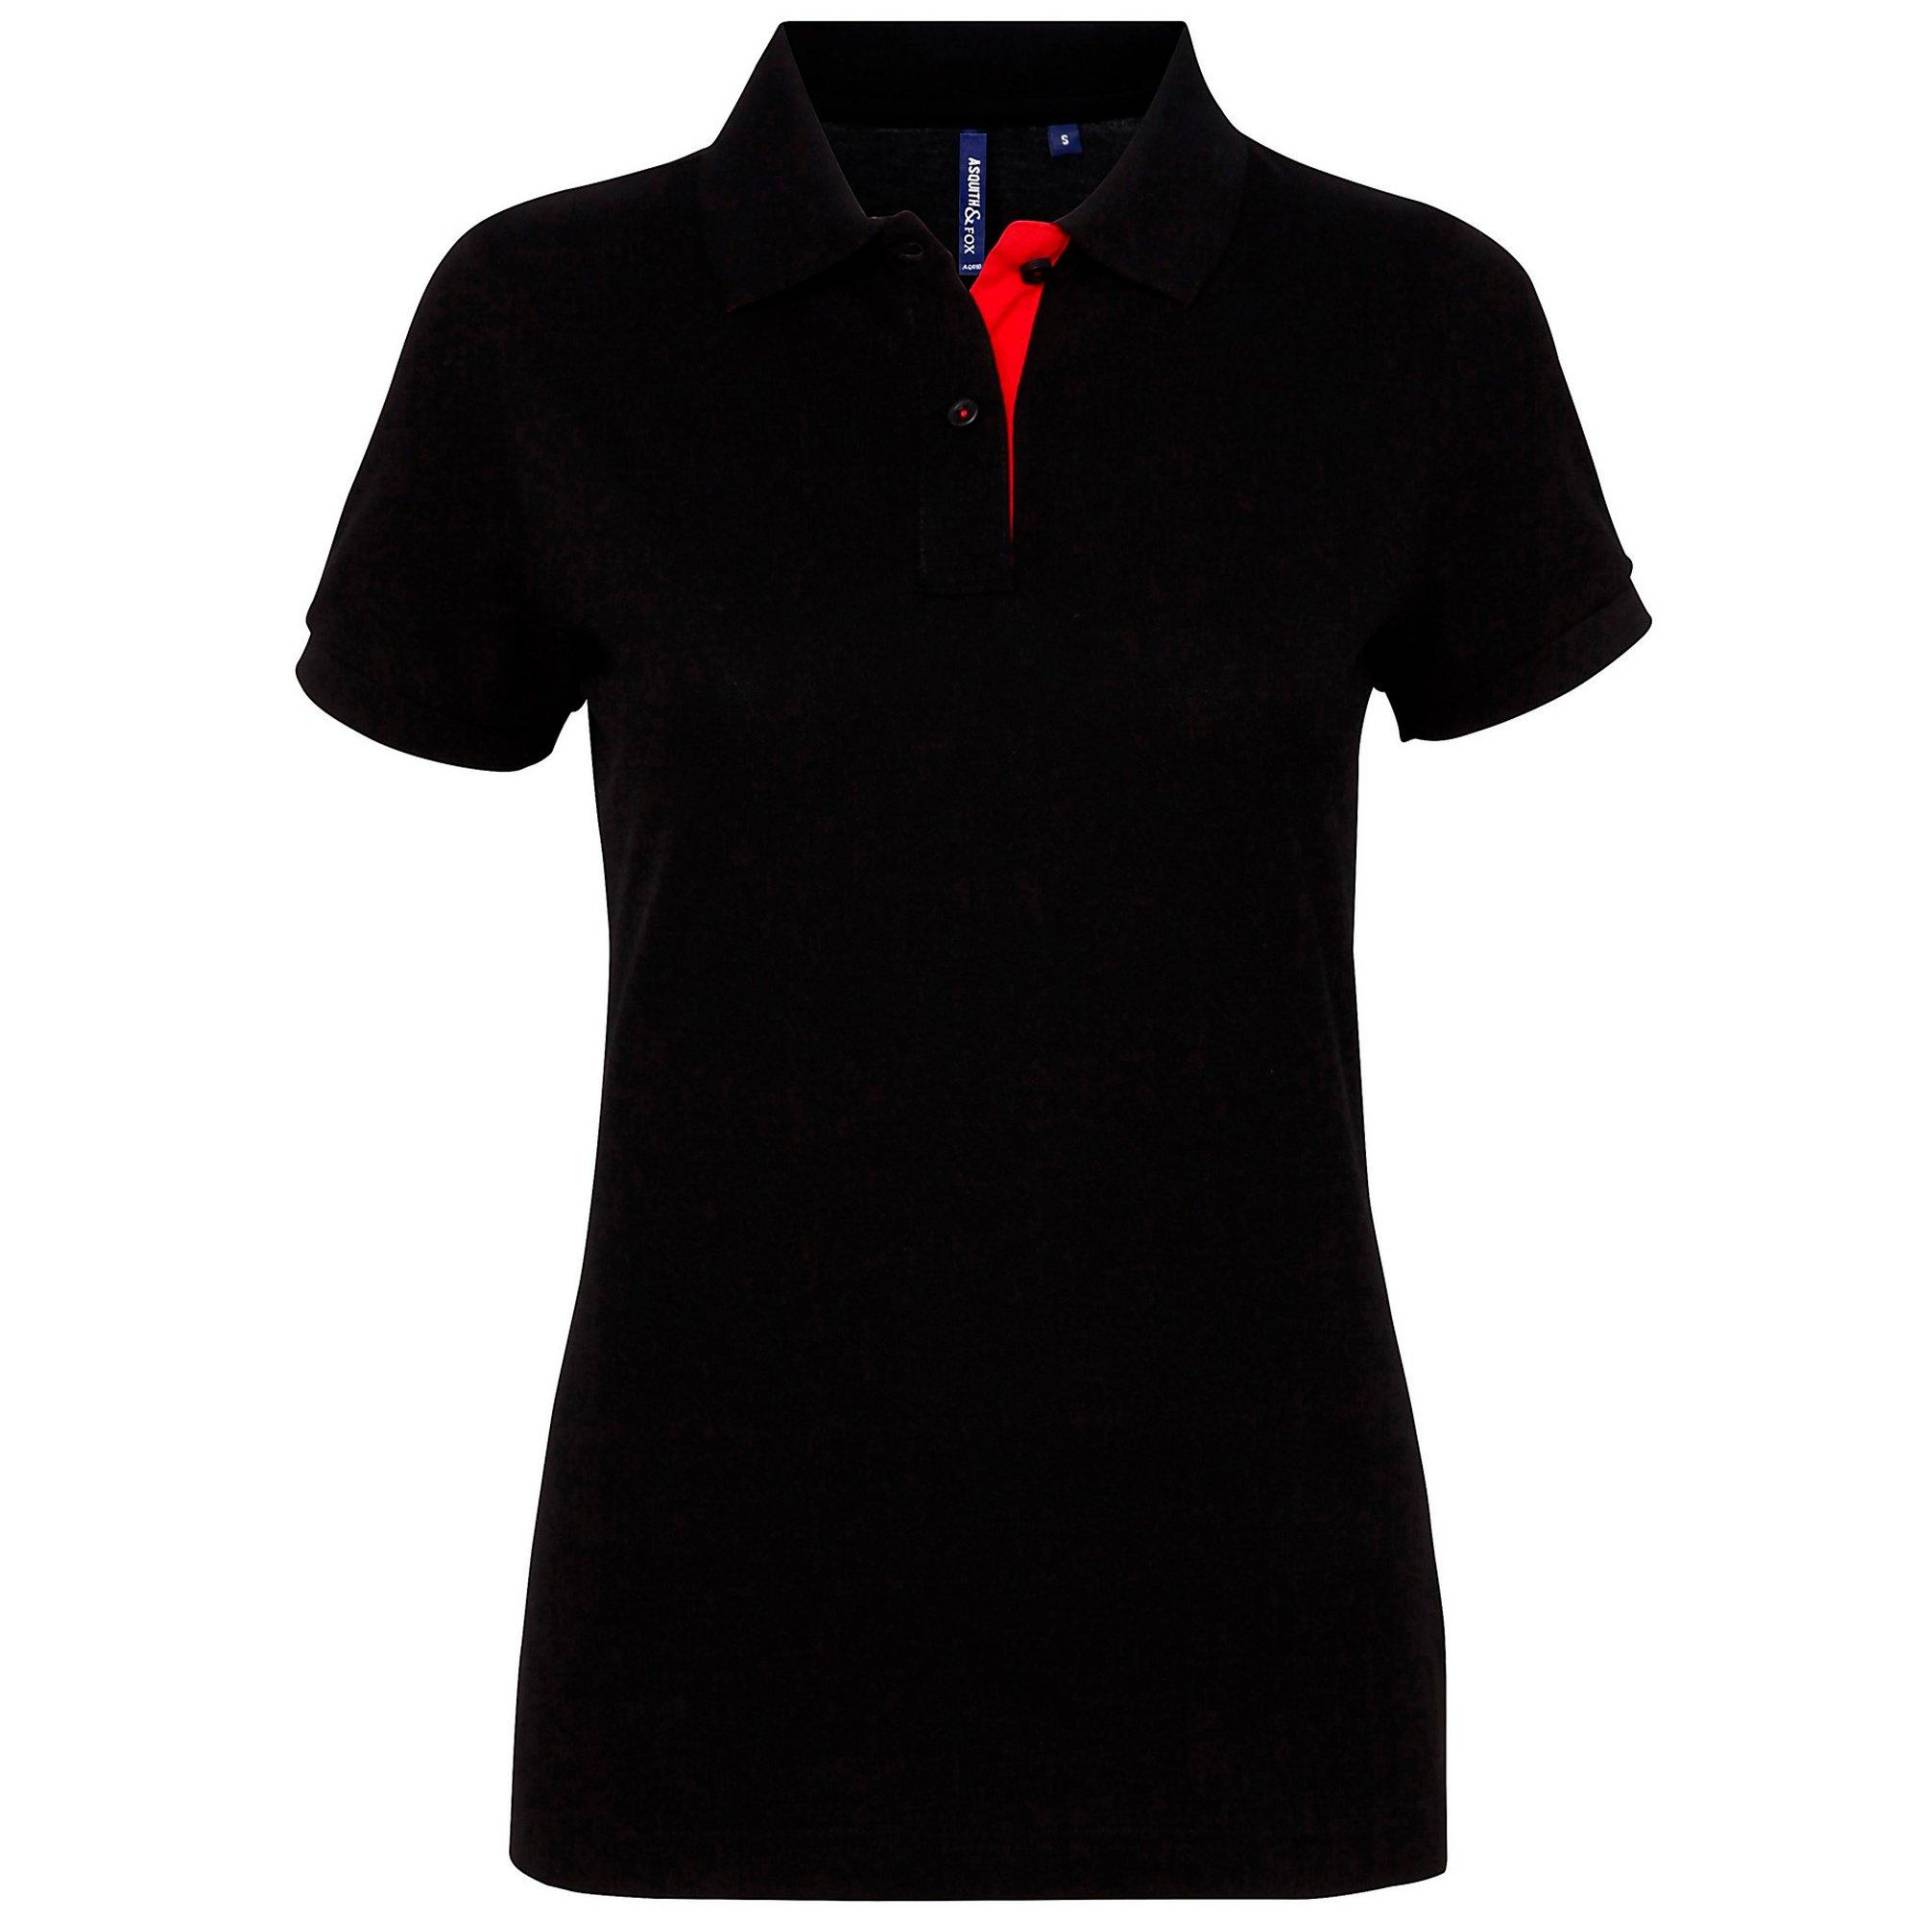 Kurzarm Kontrast Polo Shirt Damen Schwarz XL von Asquith & Fox